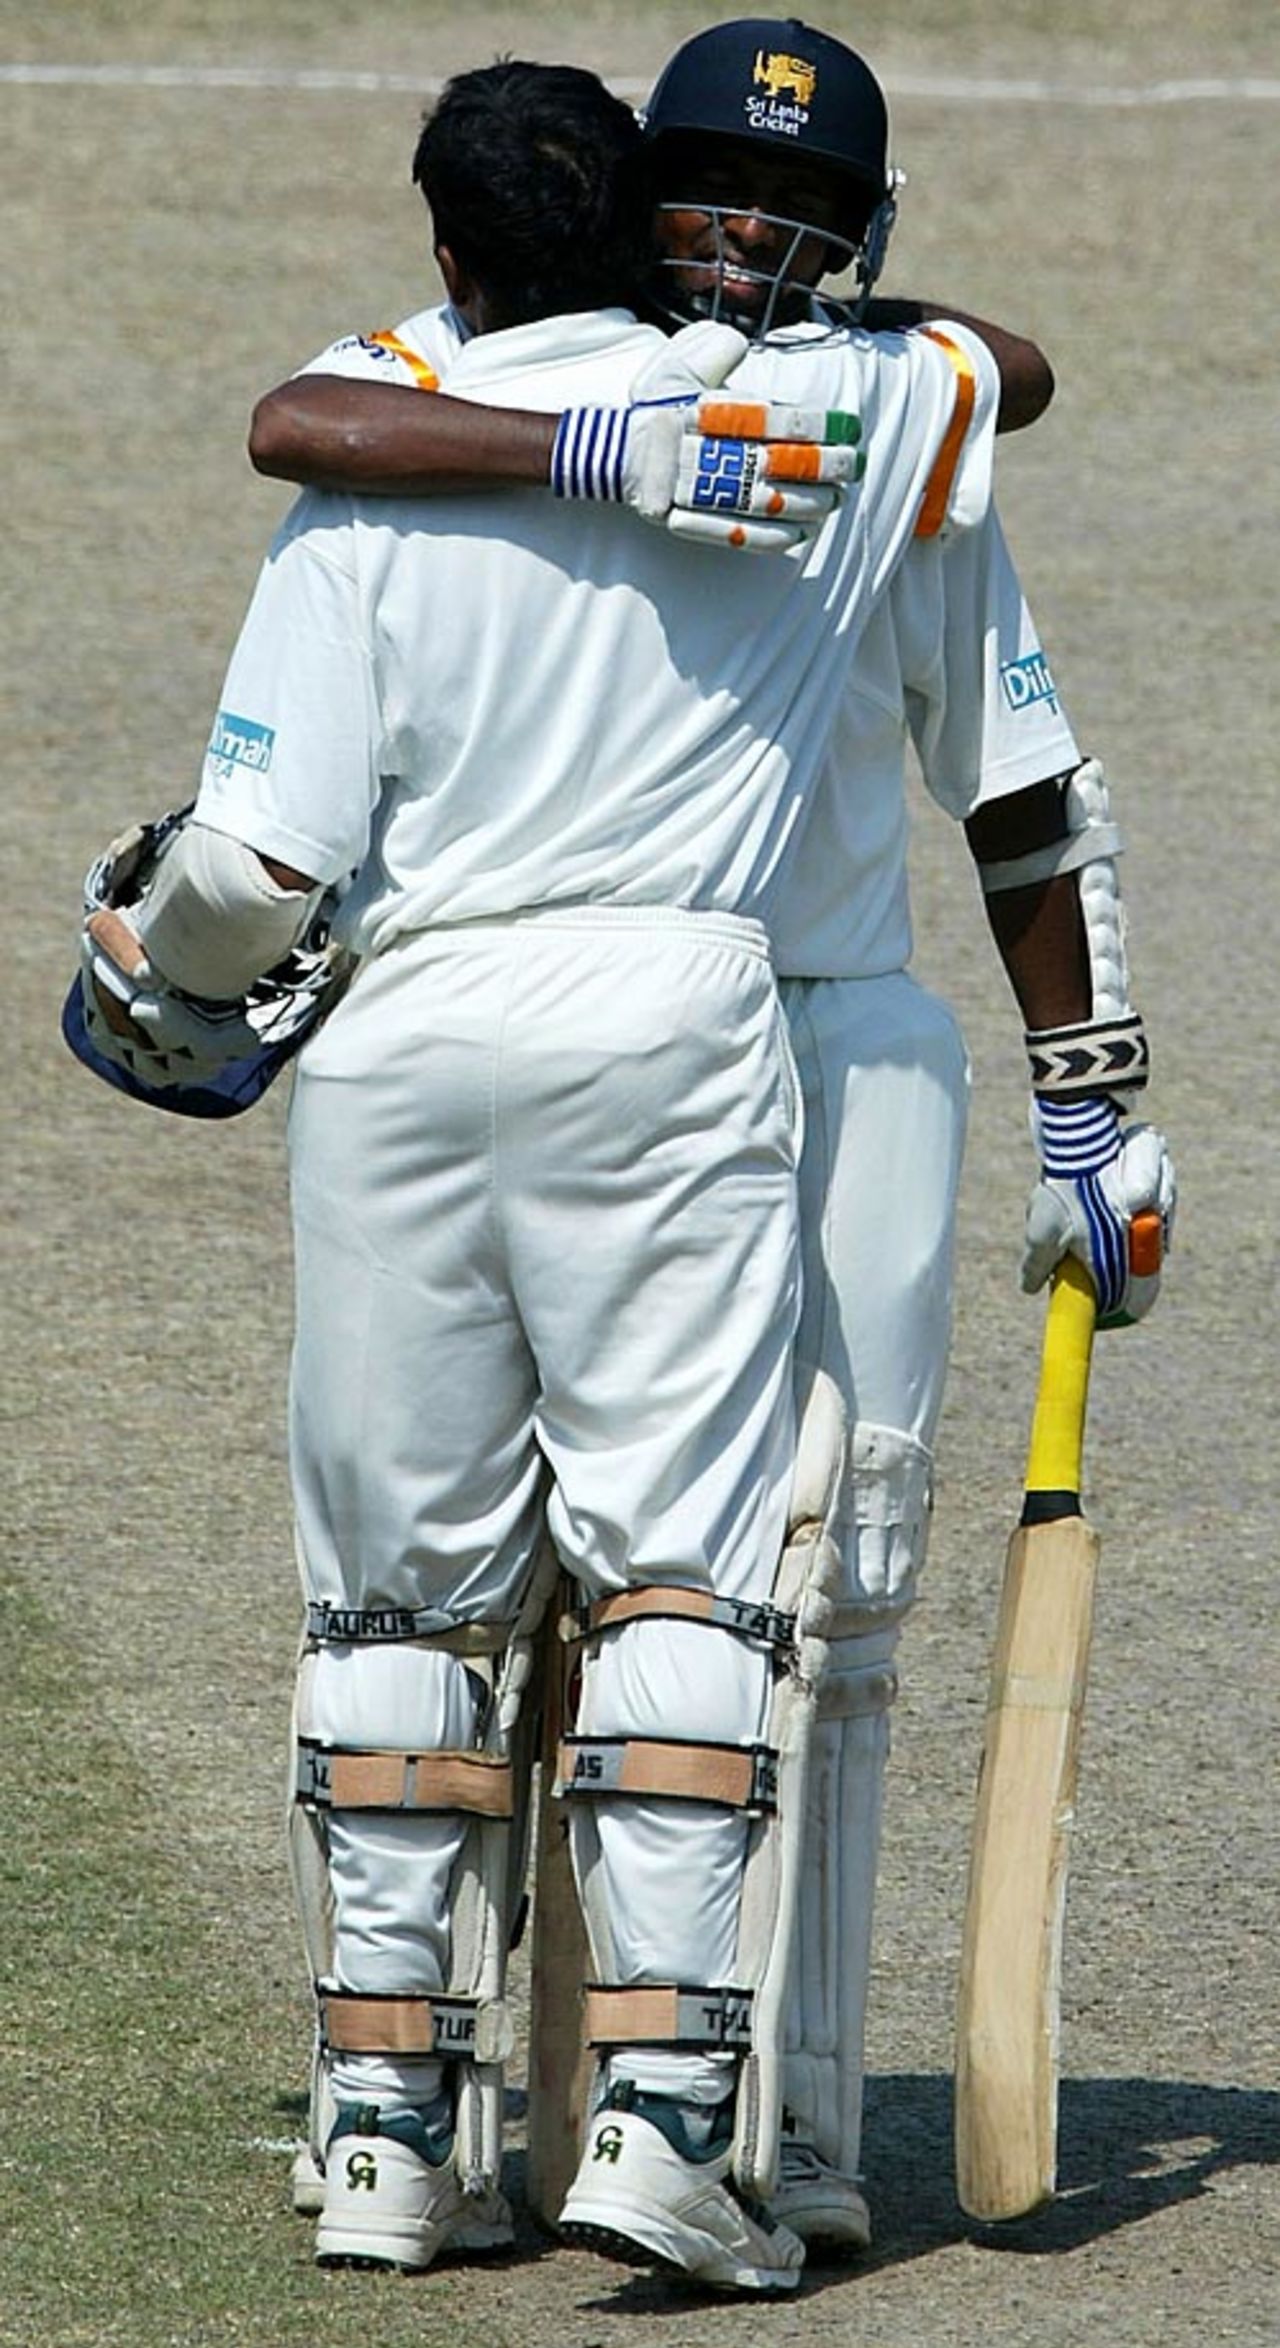 Thilan Samaraweera gives Mahela Jayawardene a hug after he scored his hundred, Sri Lanka v England, 3rd Test, Colombo, 3rd day, December 20, 2003